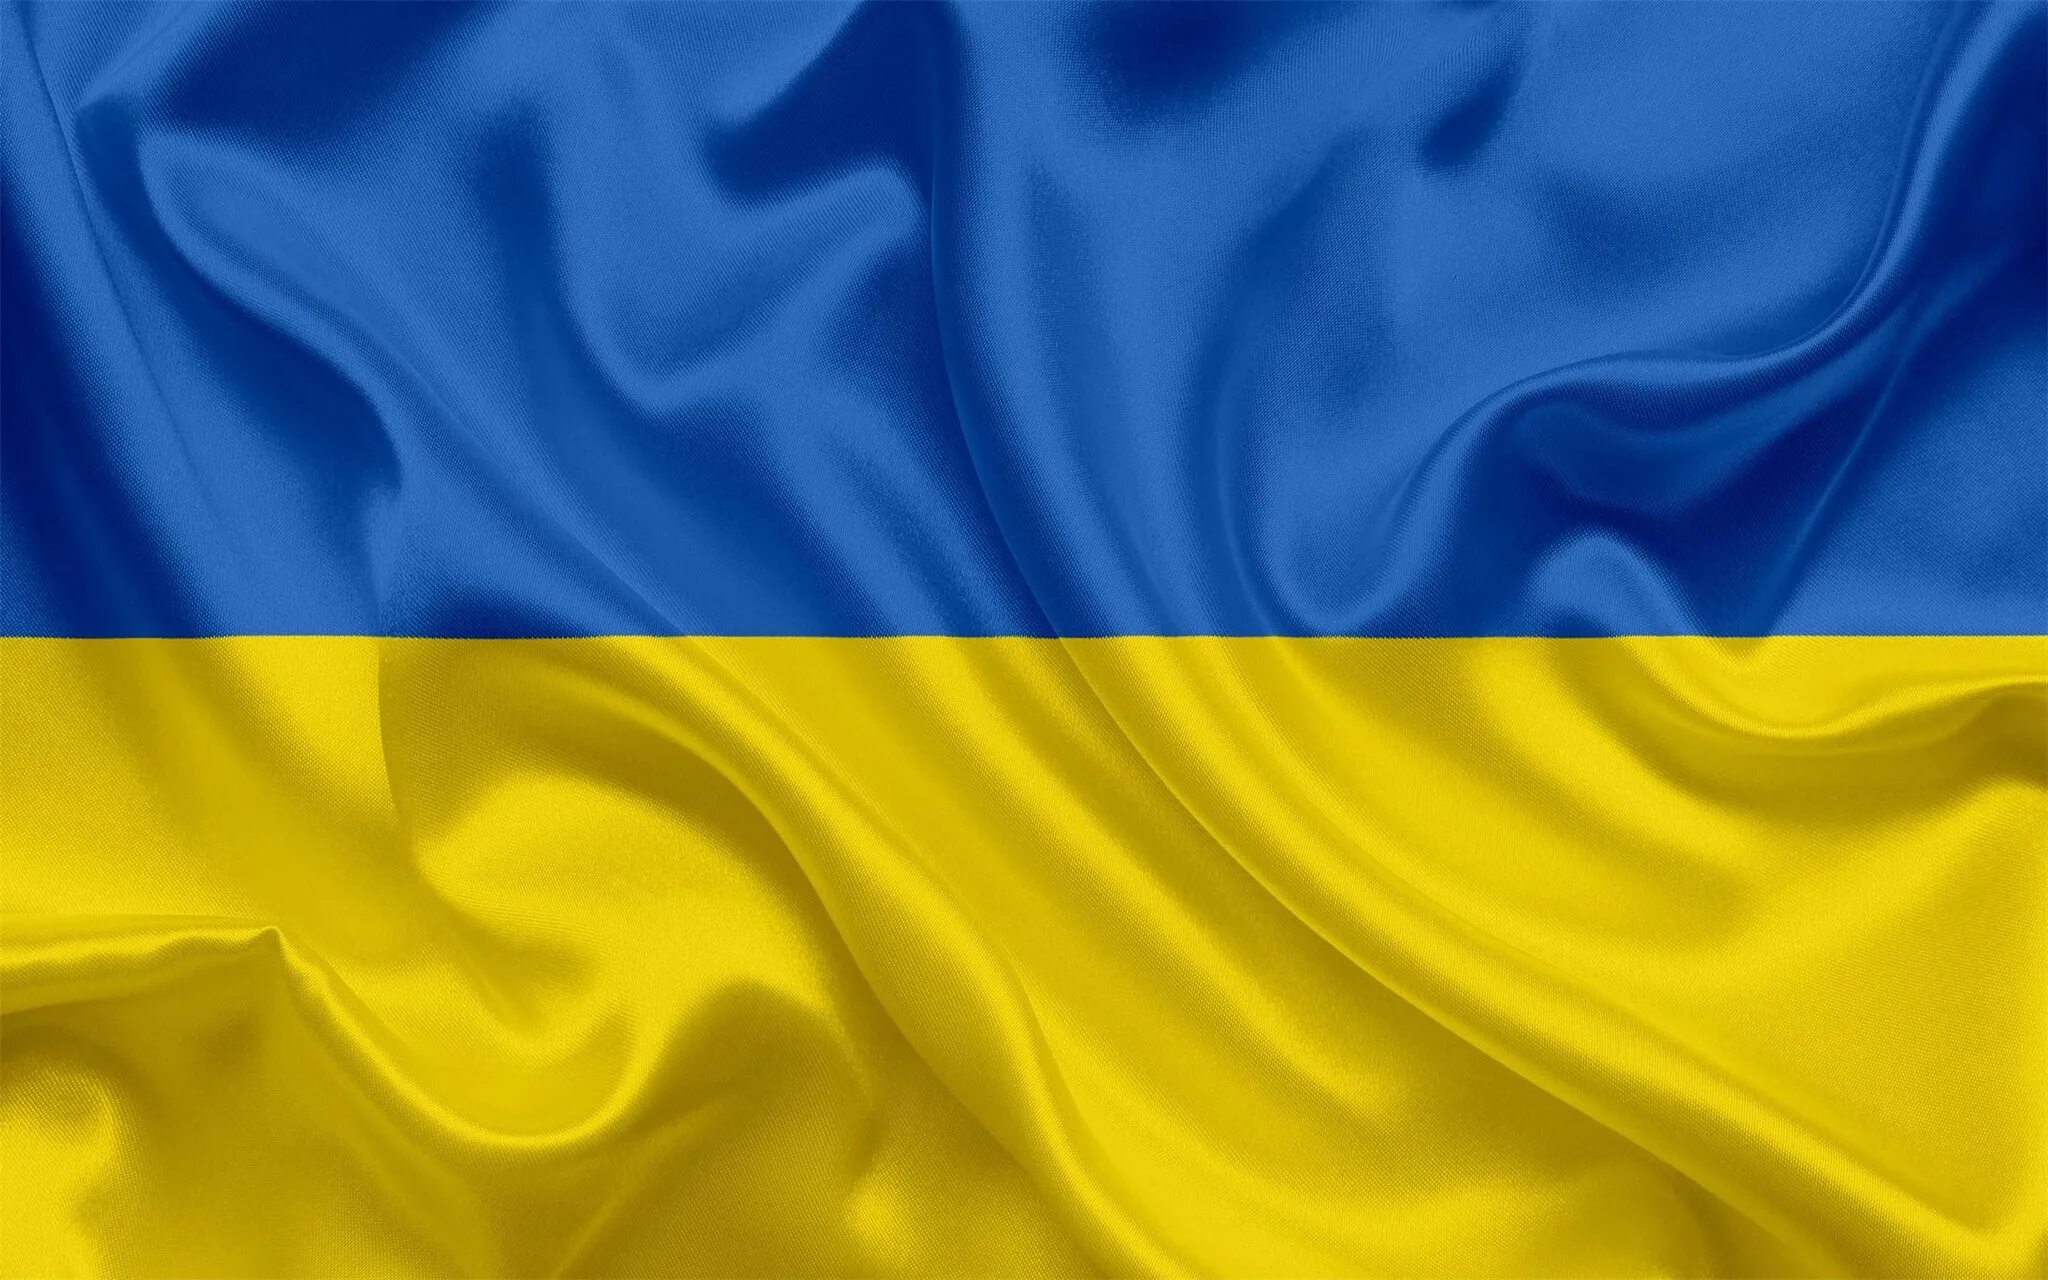 Сине желтый флаг украины. Флаг Украины. Флаг Украины 1649. Украинский прапор флаг. Флаг Украины желто синий.